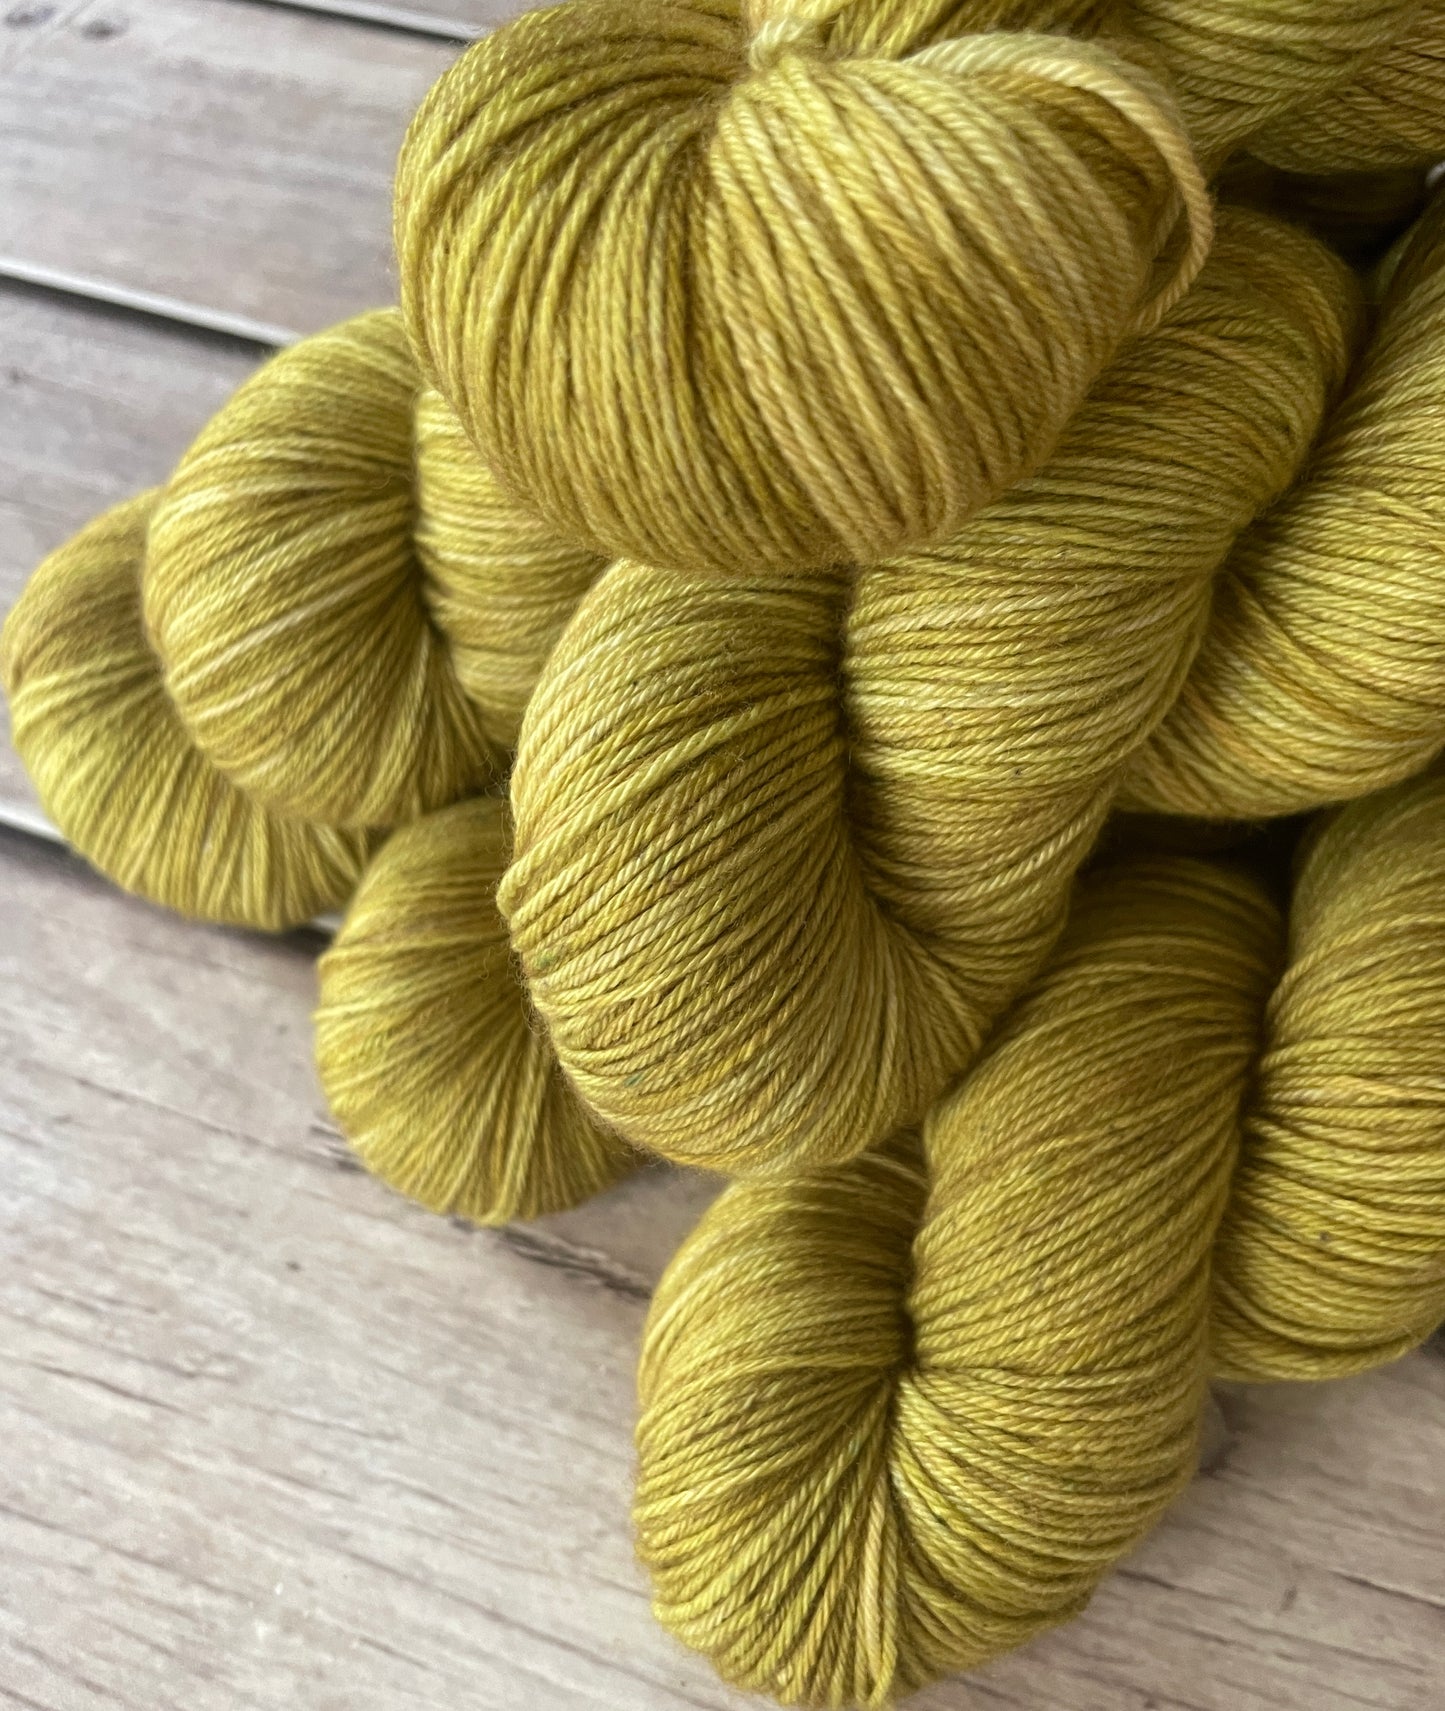 Tall Grass ooak - sock yarn in merino and nylon - Darjeeling